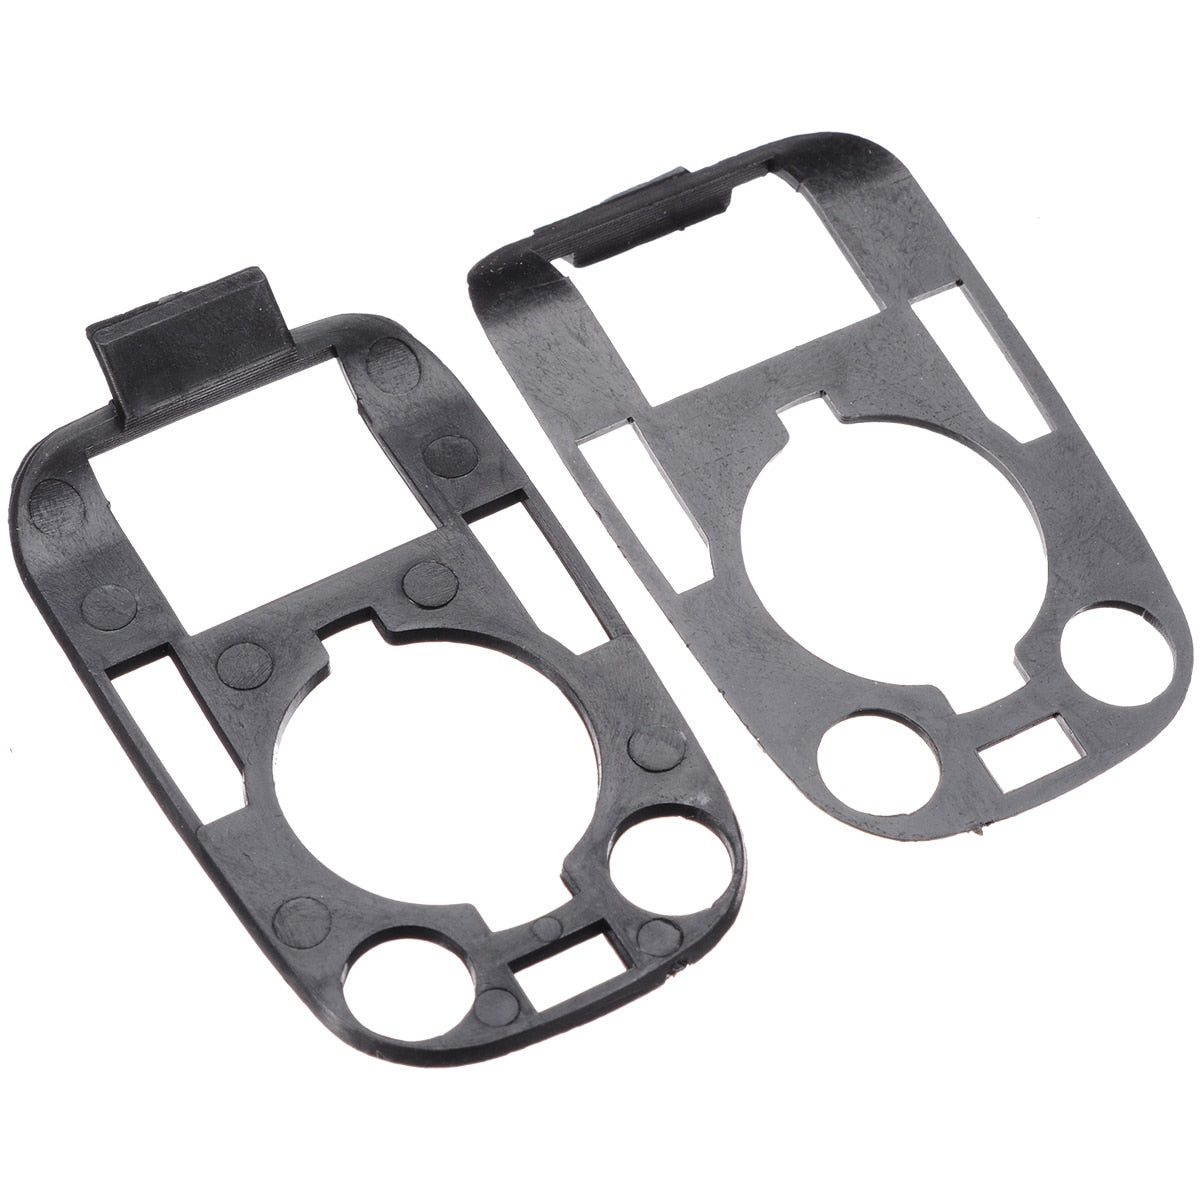 Car Door Handle End Cap Protective Kit 8pcs/set For Peugeot Citroen